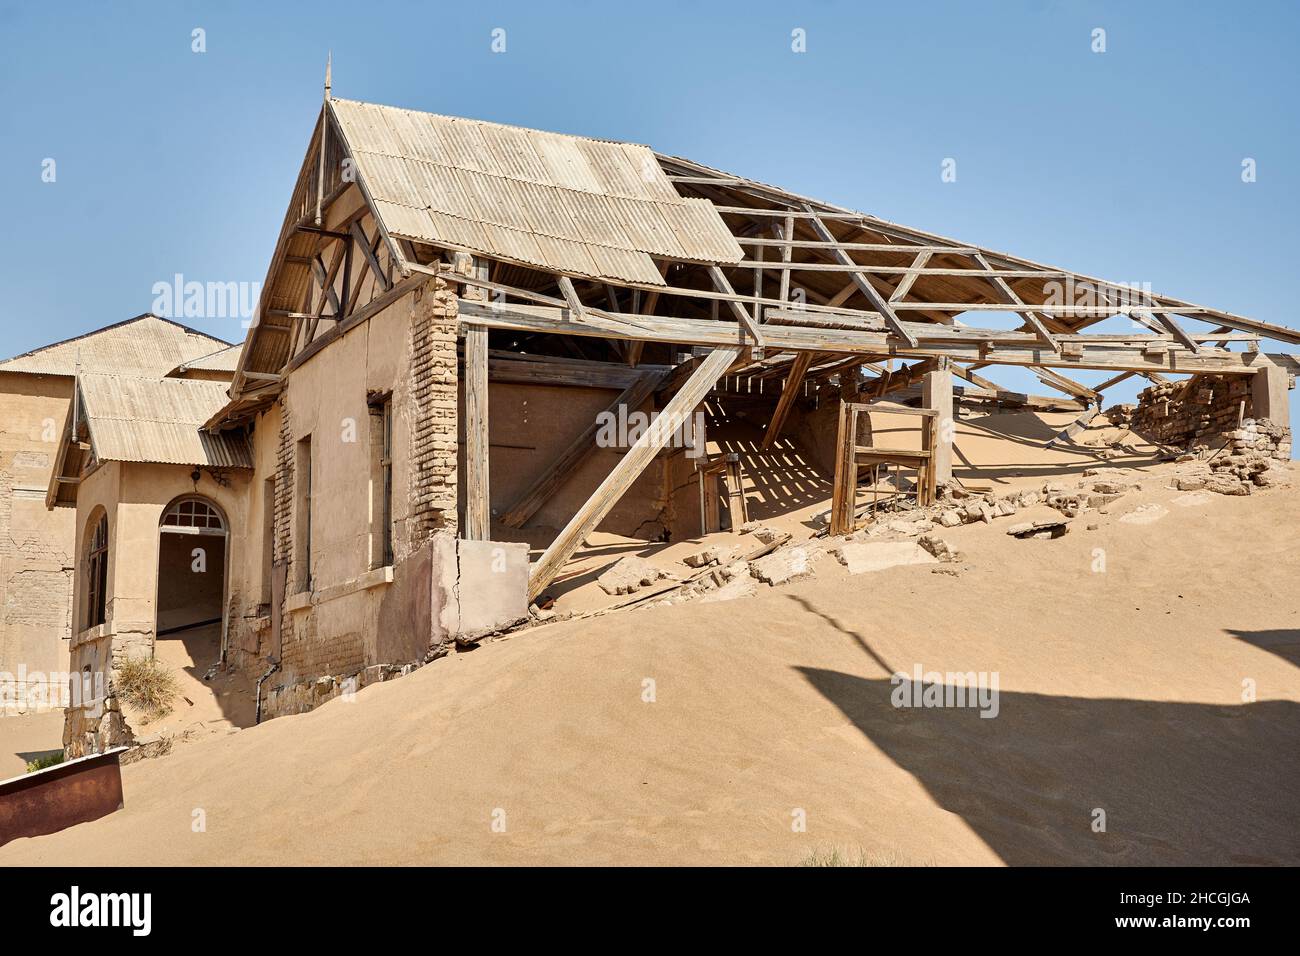 Nature takes over ruin house in Namib desert, Kolmanskop ghost town, Namibia, Africa Stock Photo